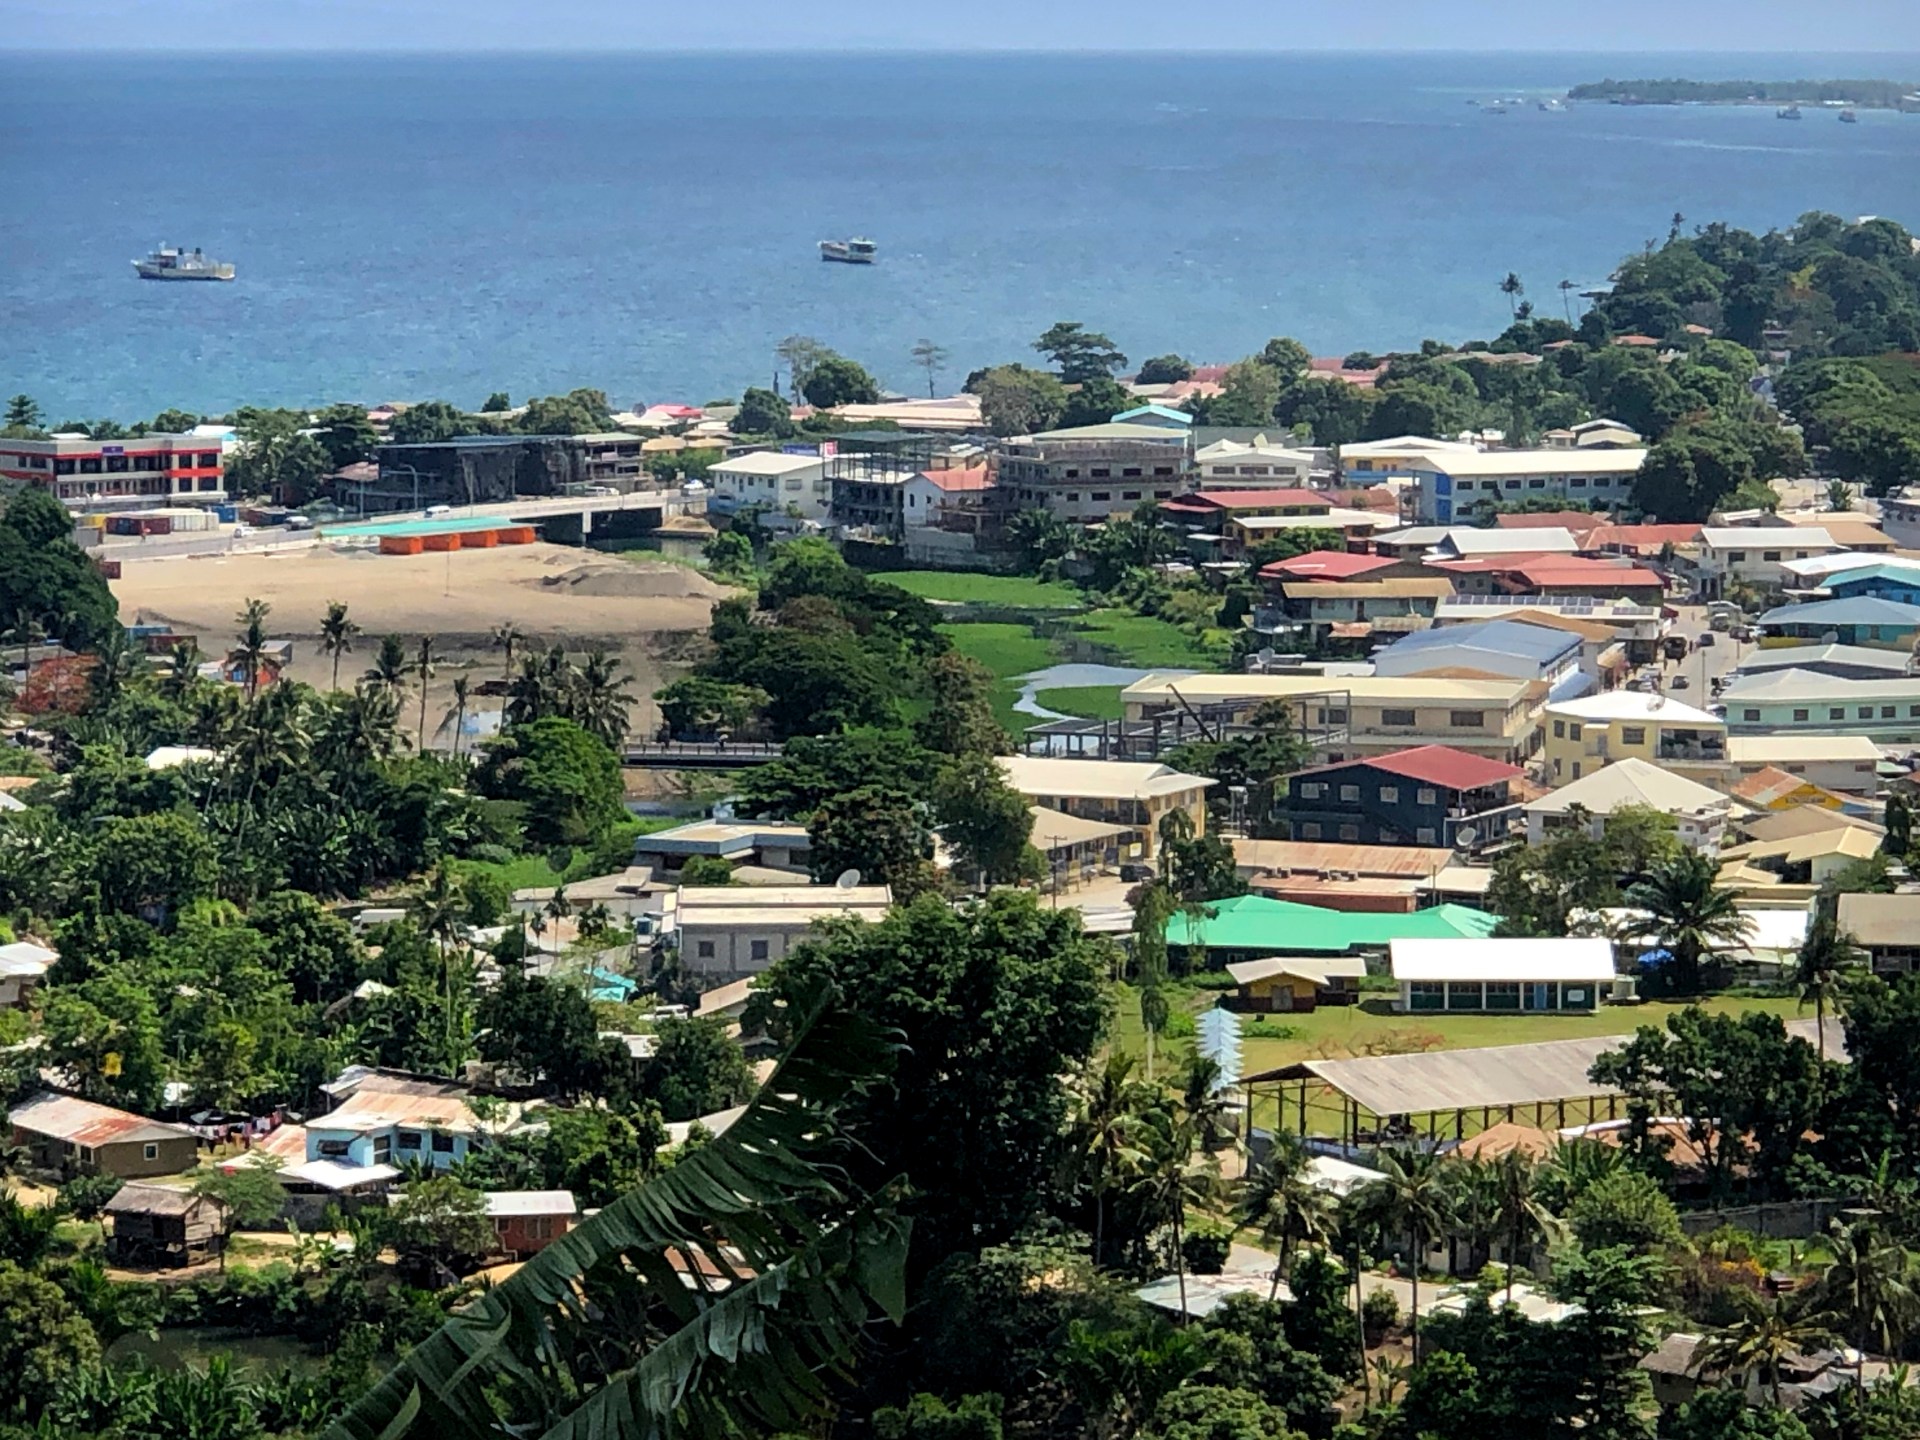 Solomon Islands shaken by enormous earthquake, tsunami alert issued